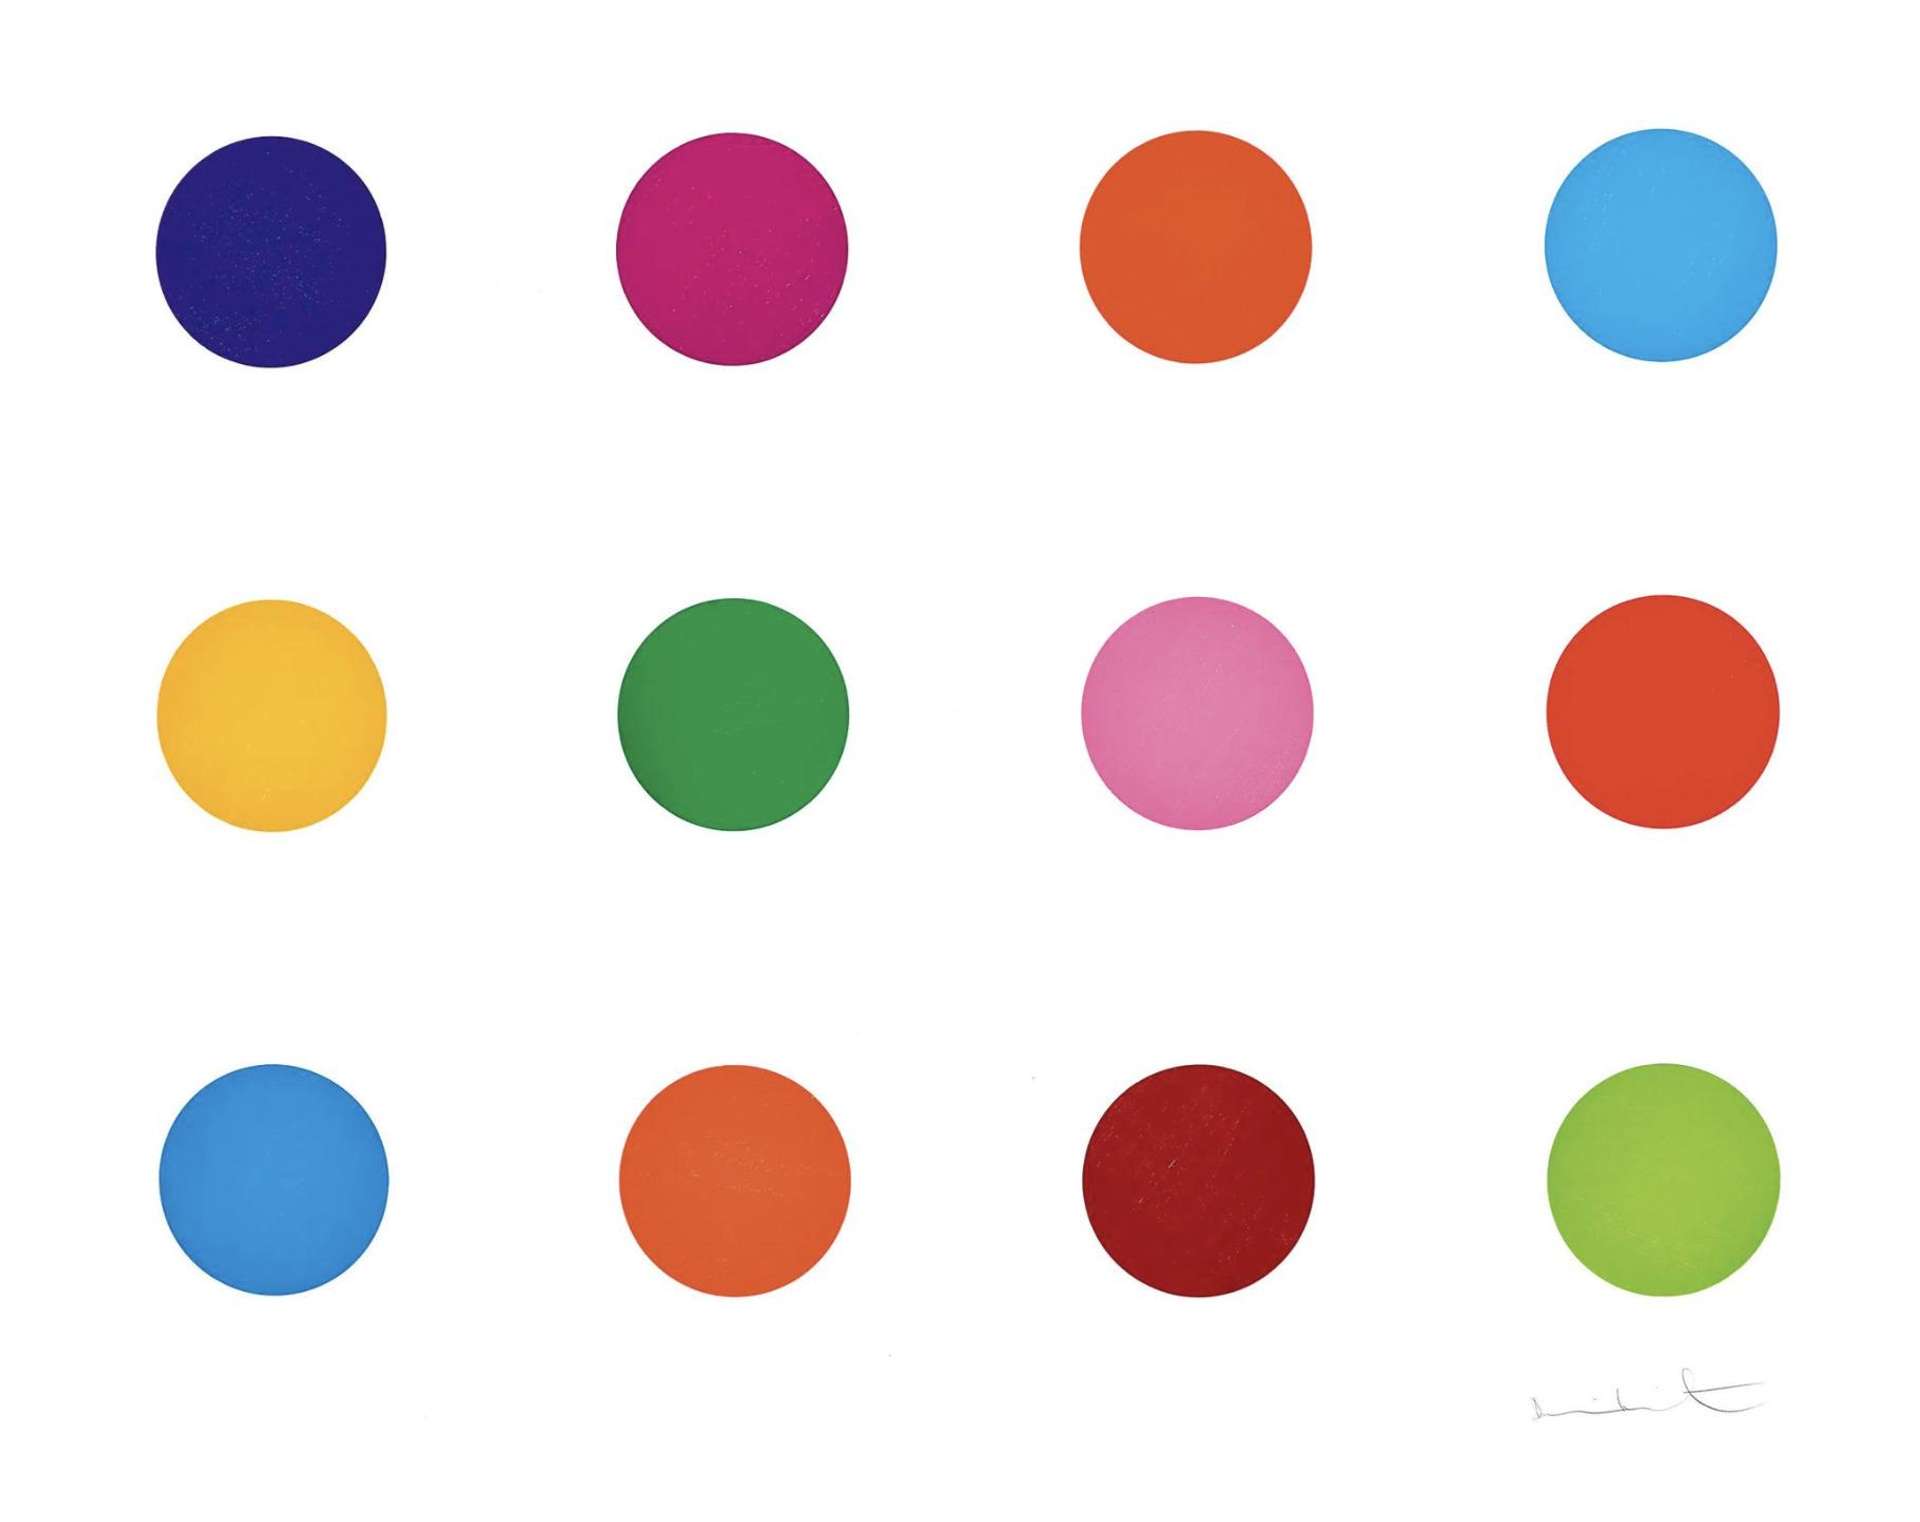 Three horizontal rows of multi-coloured dots